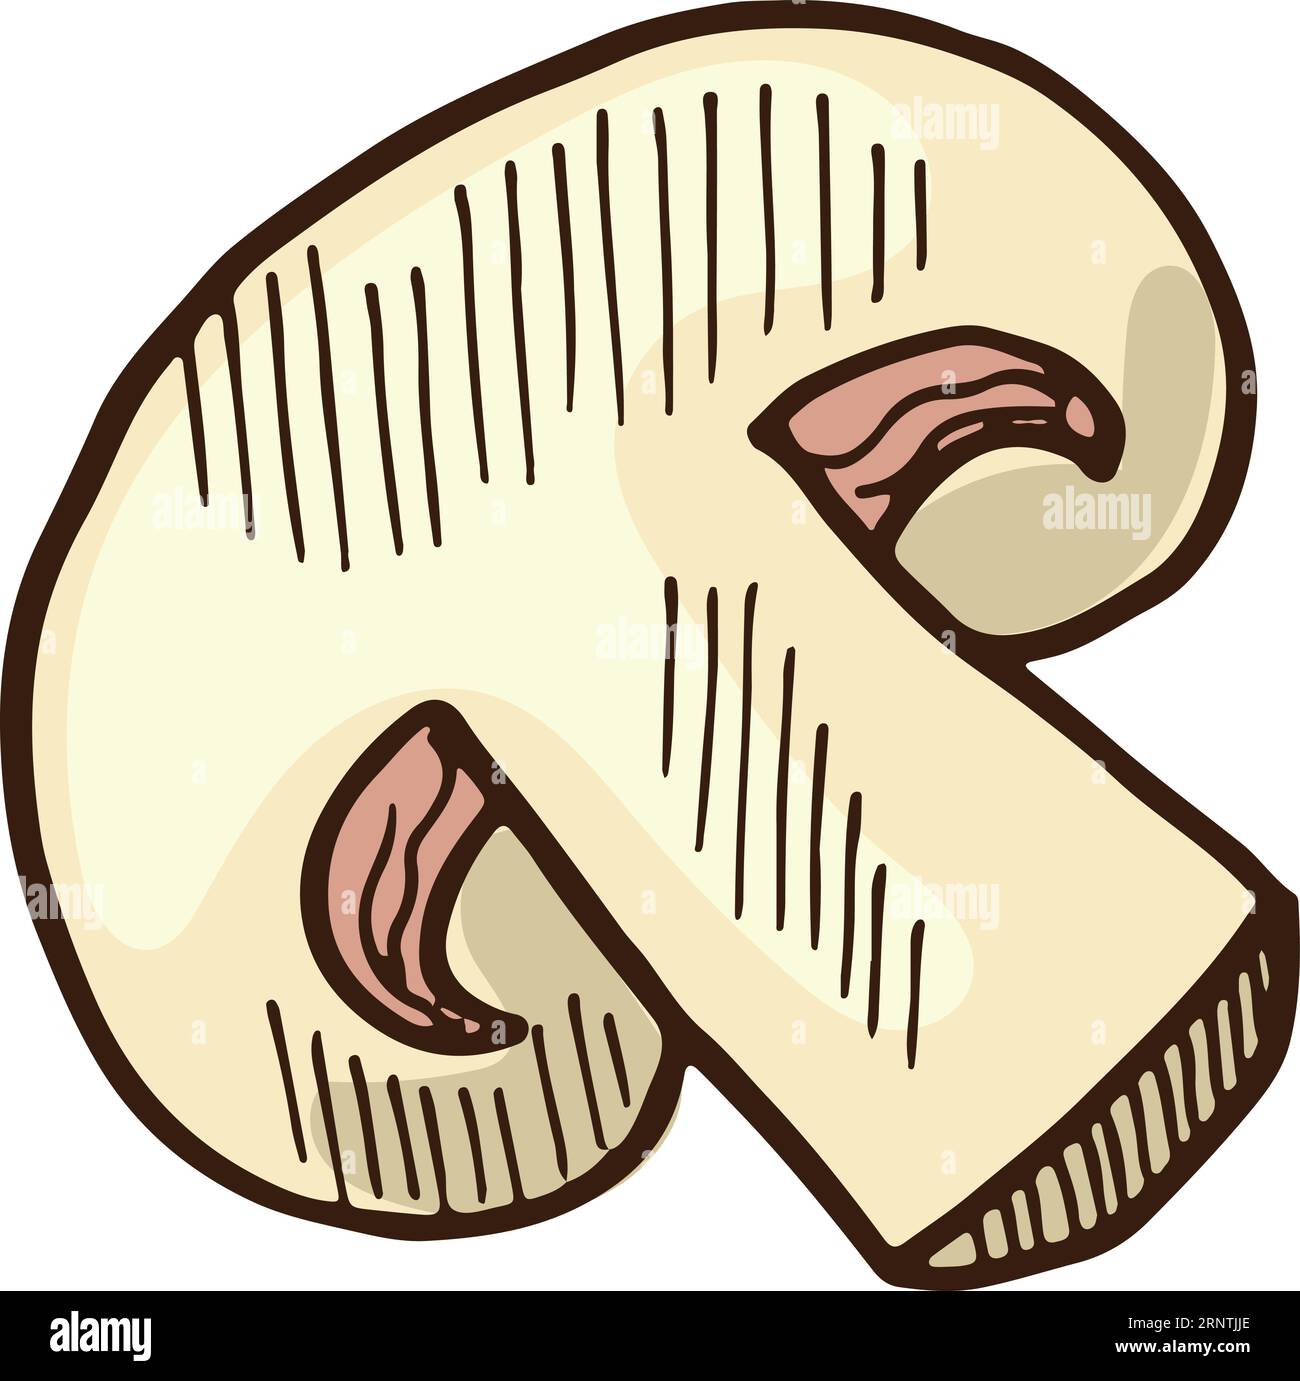 Champignon slice icon. Color food ingredient sketch Stock Vector